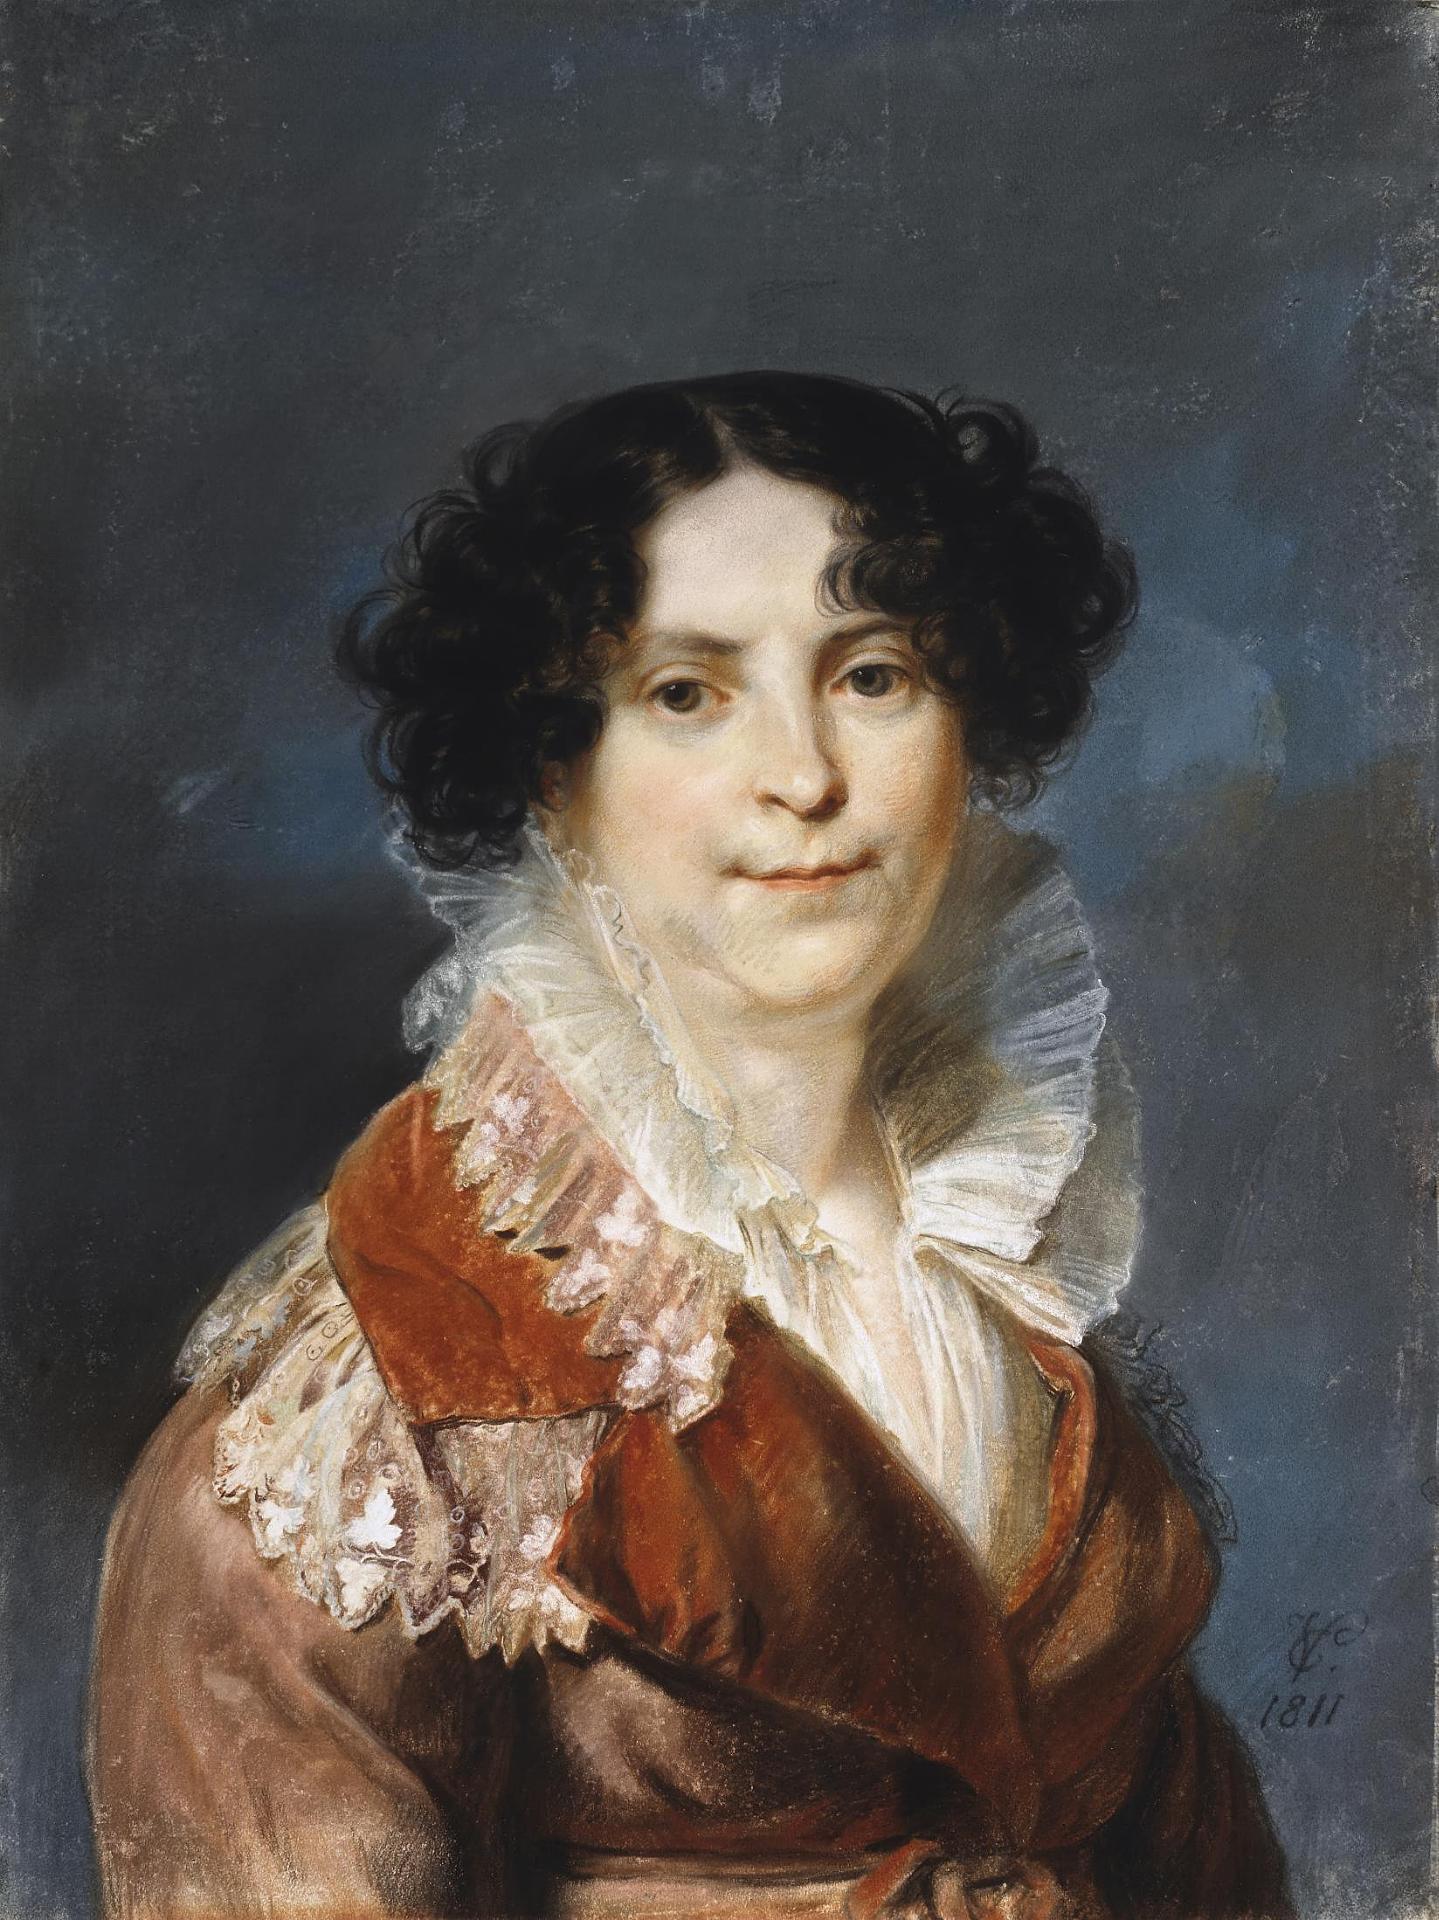 Карл Христиан Фогель фон Фогельштейн? "Портрет дамы". 1811. Эрмитаж, Санкт-Петербург.